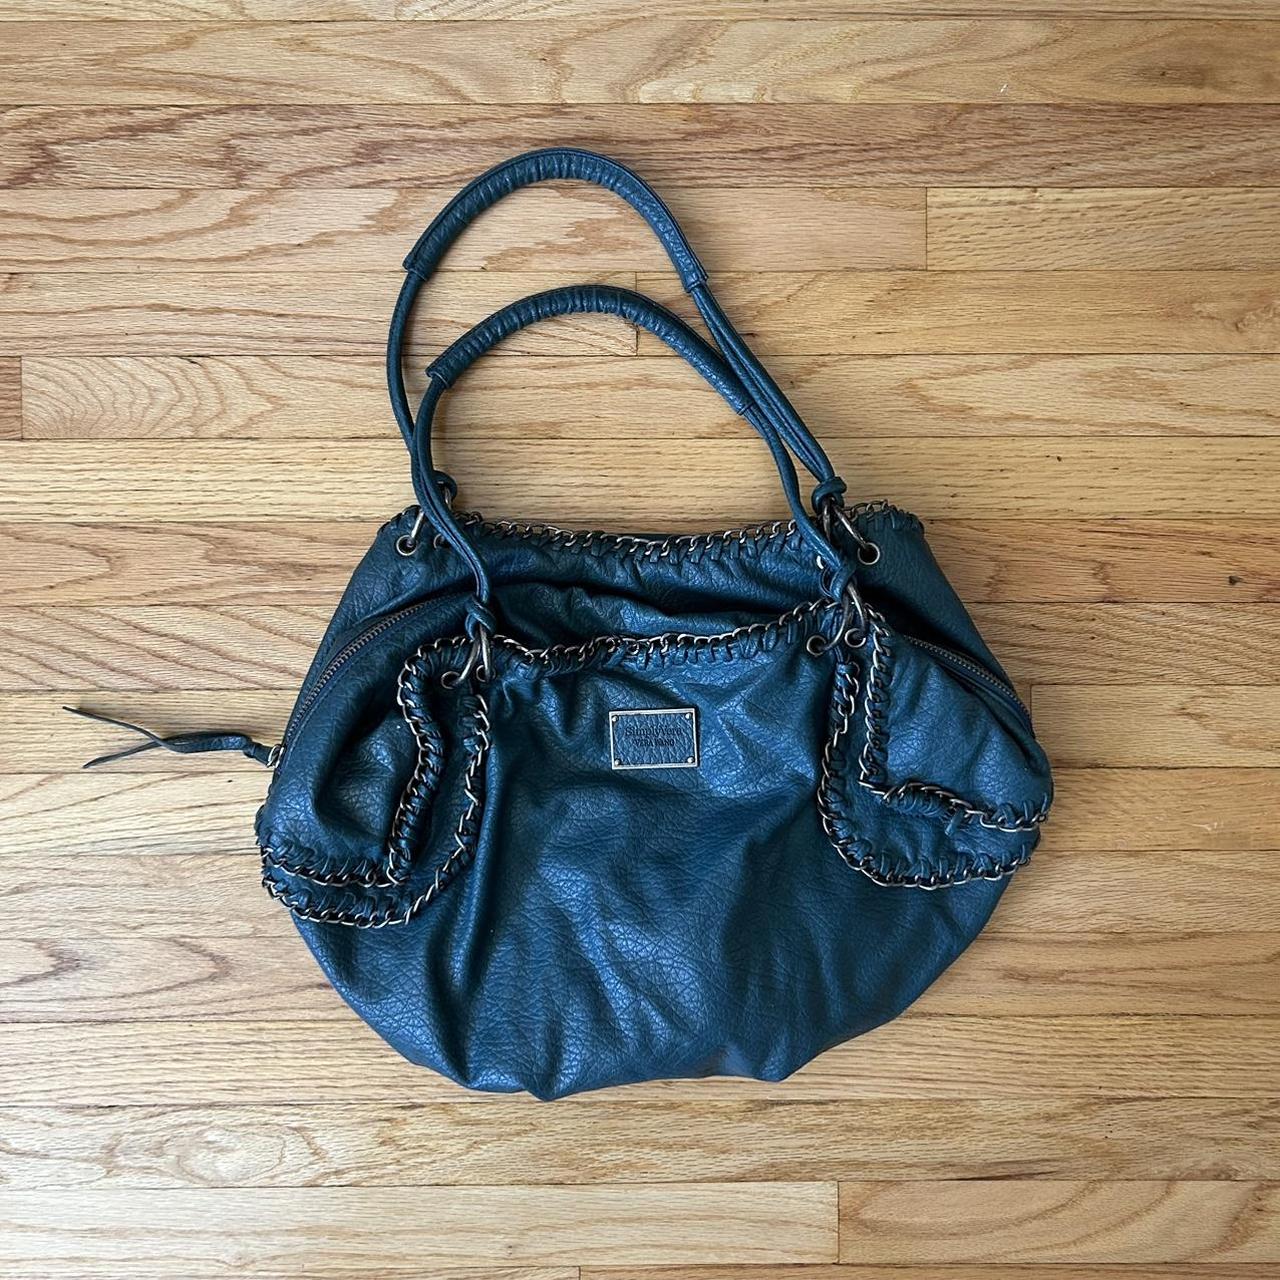 Simply Vera Vera Wang Blue Silver Purse Shoulder Bag [A4] | eBay